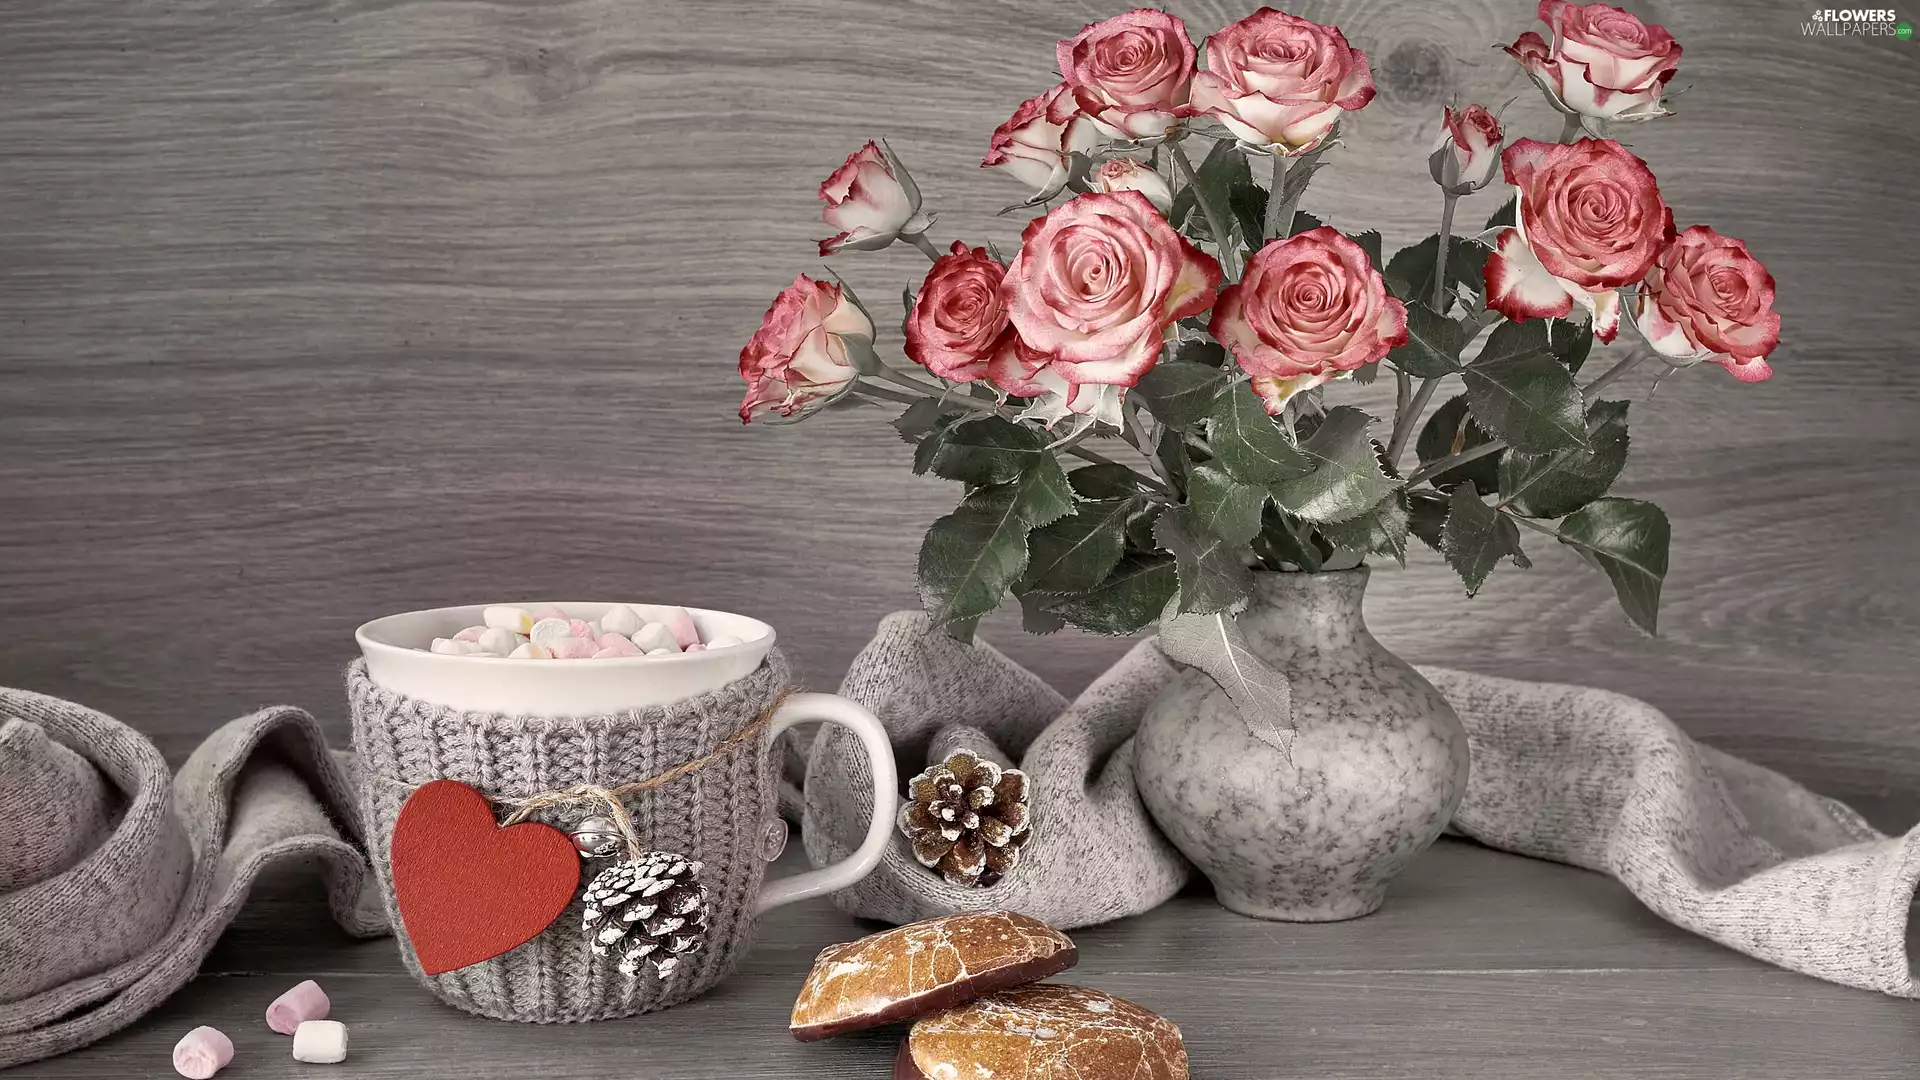 coffee, Cup, Foams, Heart teddybear, Scarf, composition, Vase, roses, cookies